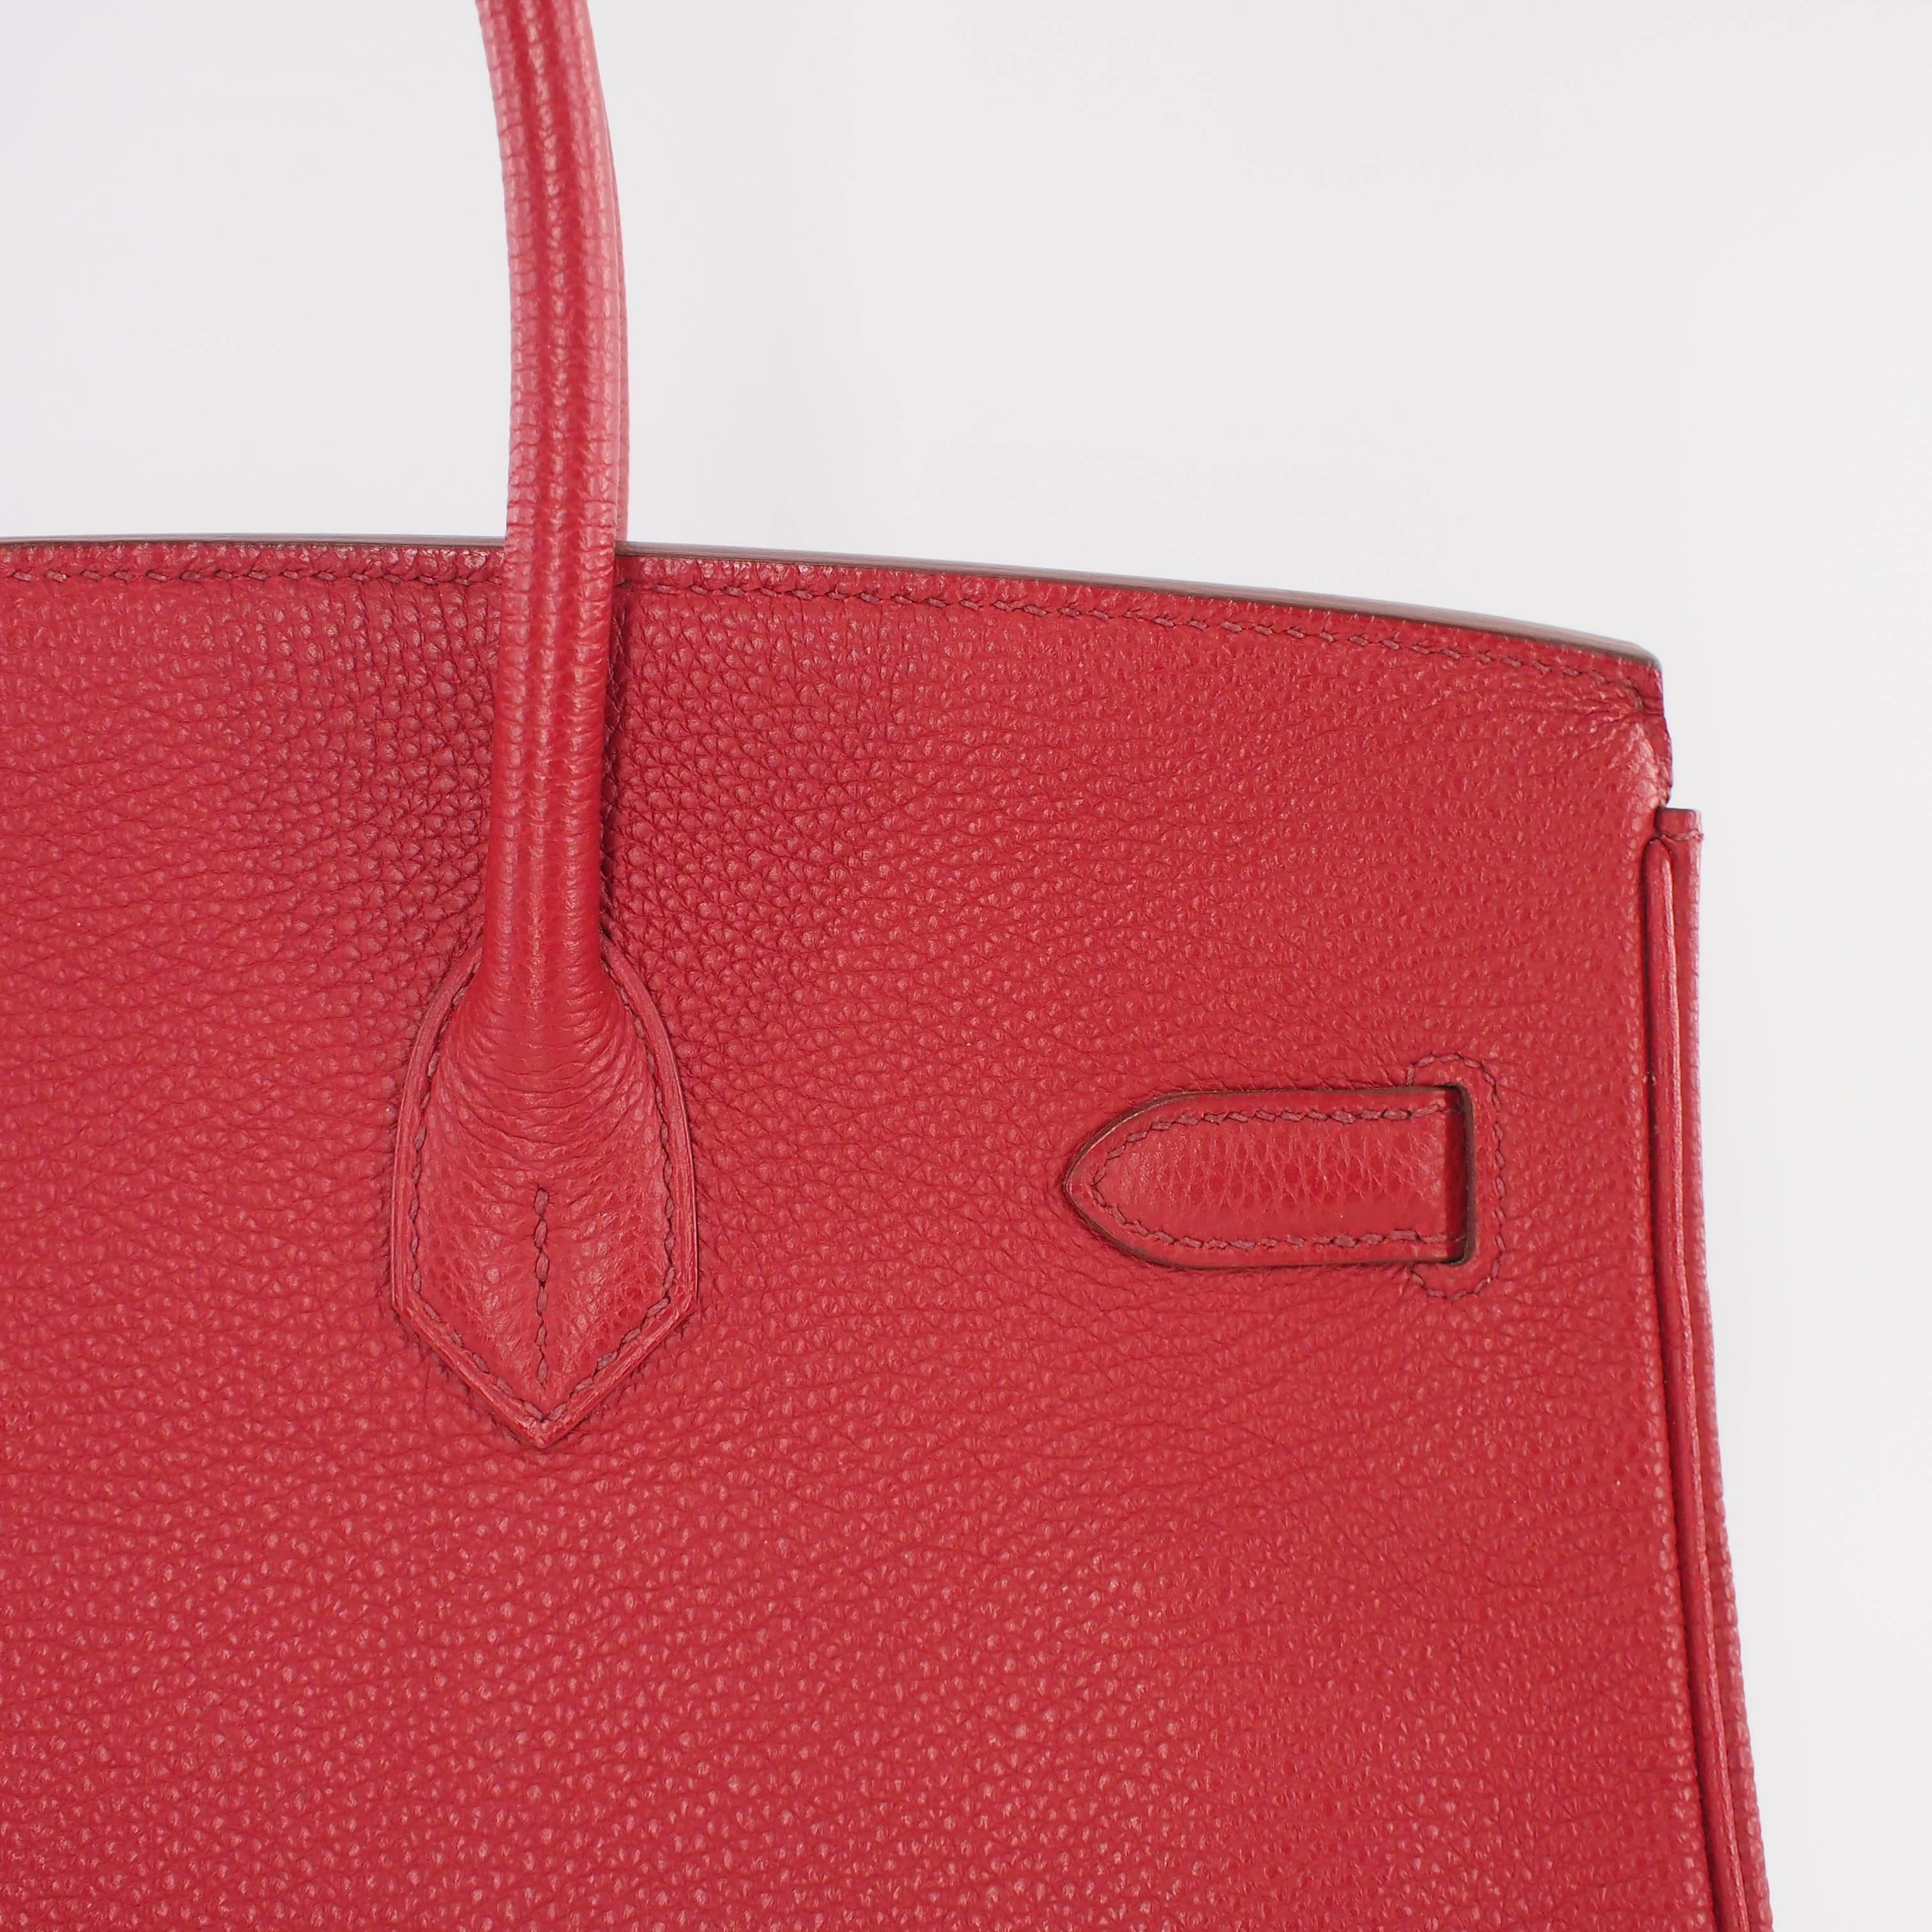 Hermes Birkin Handbag size 35 in Rouge Grenade With Palladium Hardware (PHW) 5